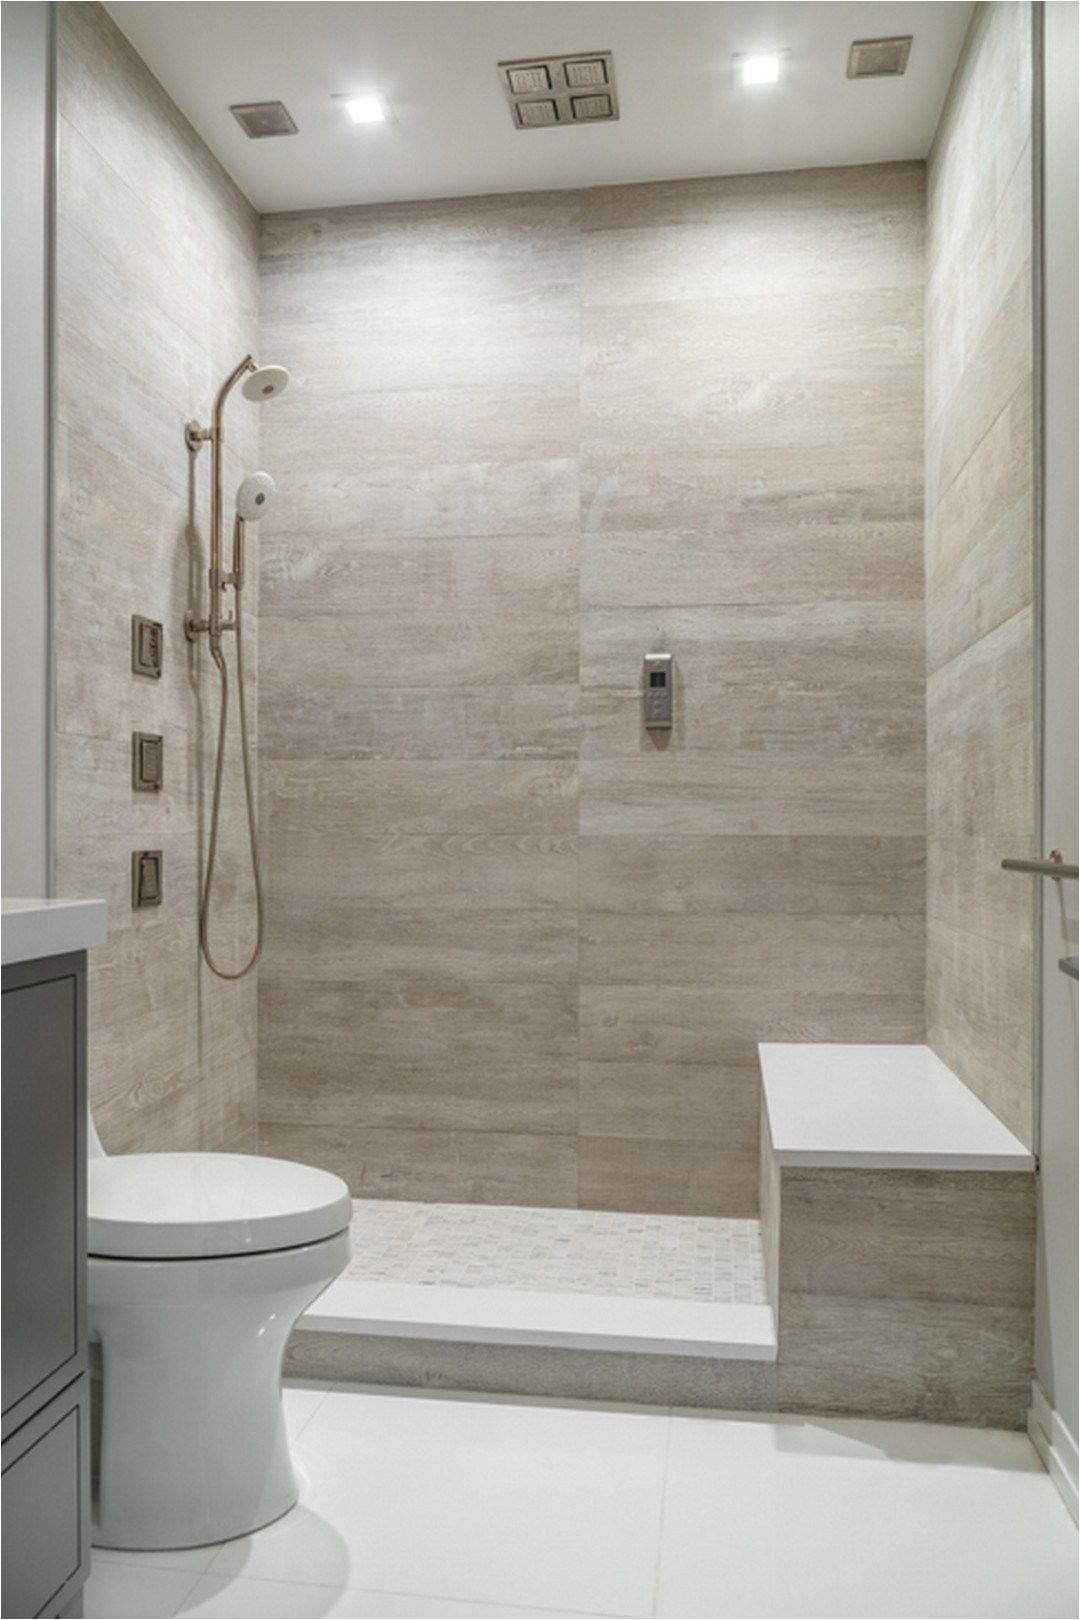 Latest Bathtub Designs 99 New Trends Bathroom Tile Design Inspiration 2017 31